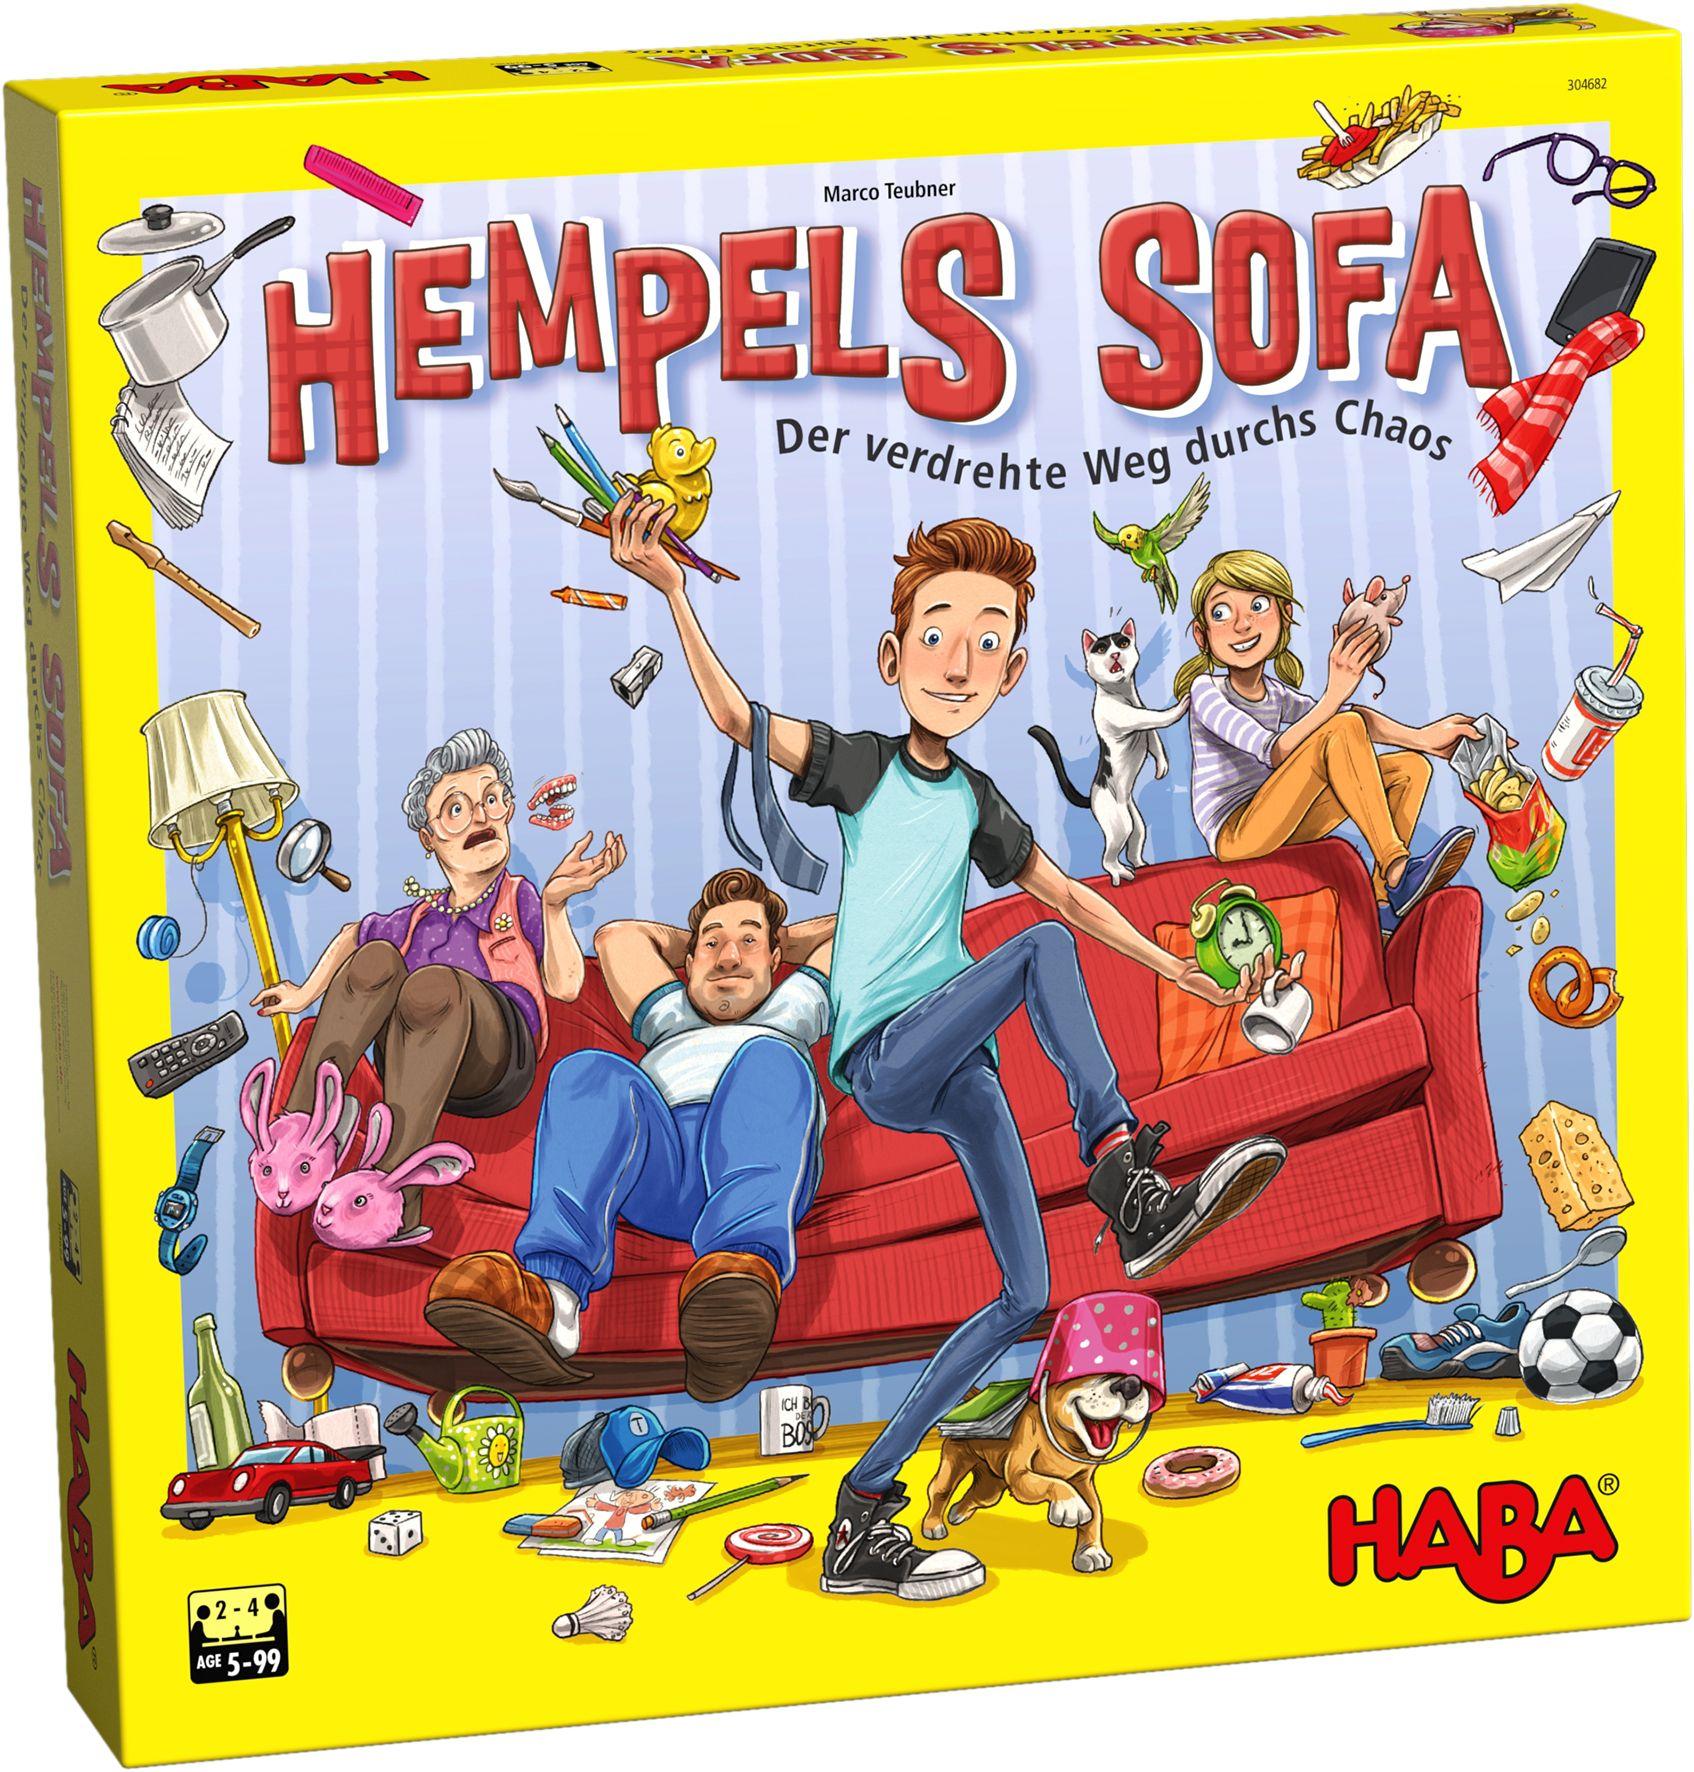 Hempels Sofa Spielanleitung – PDF Download